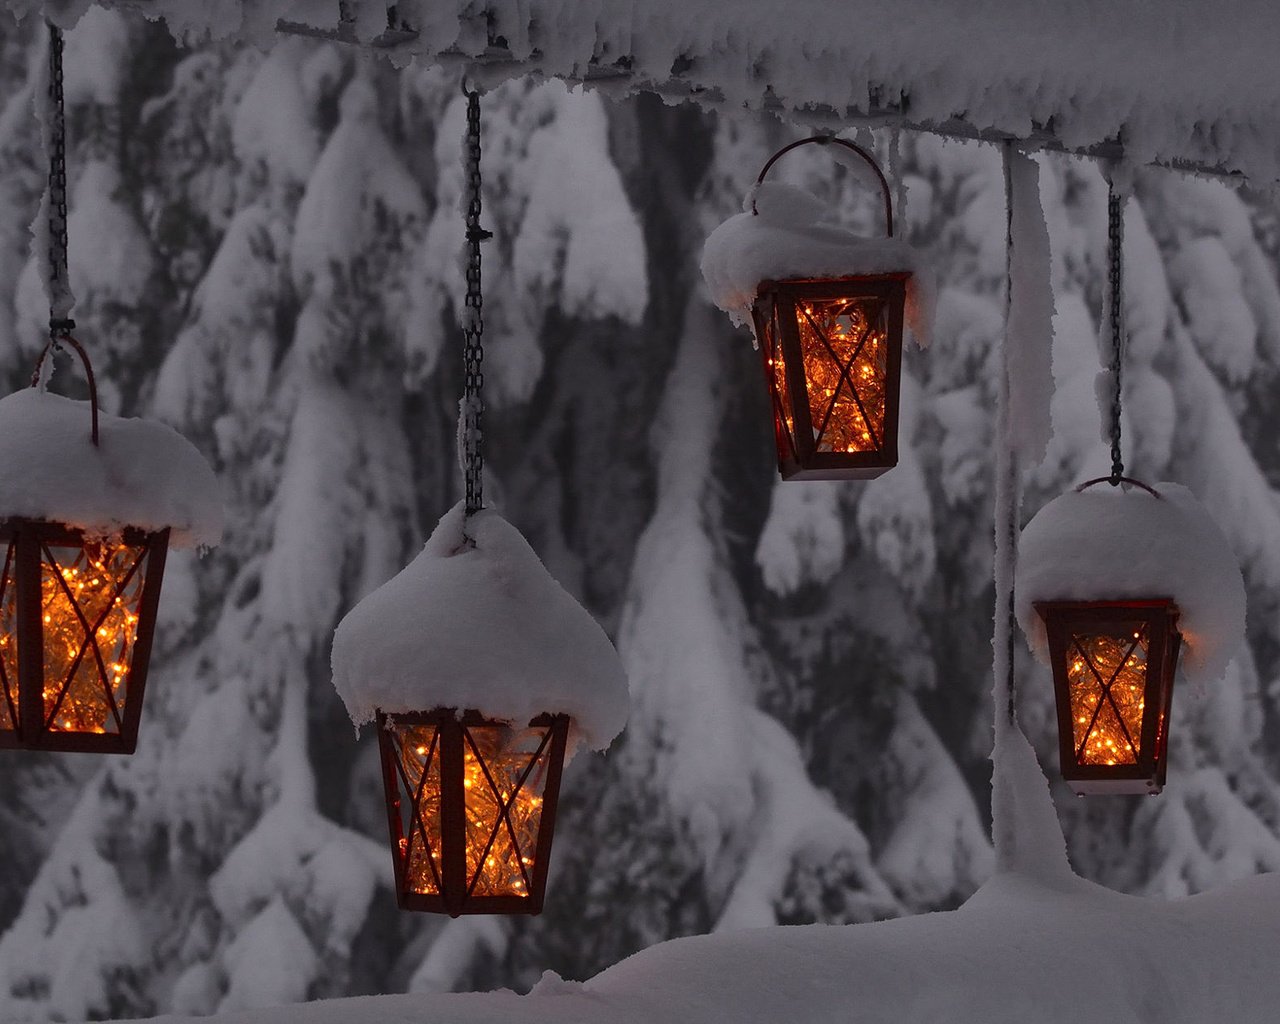 Зимний домик с фонариками